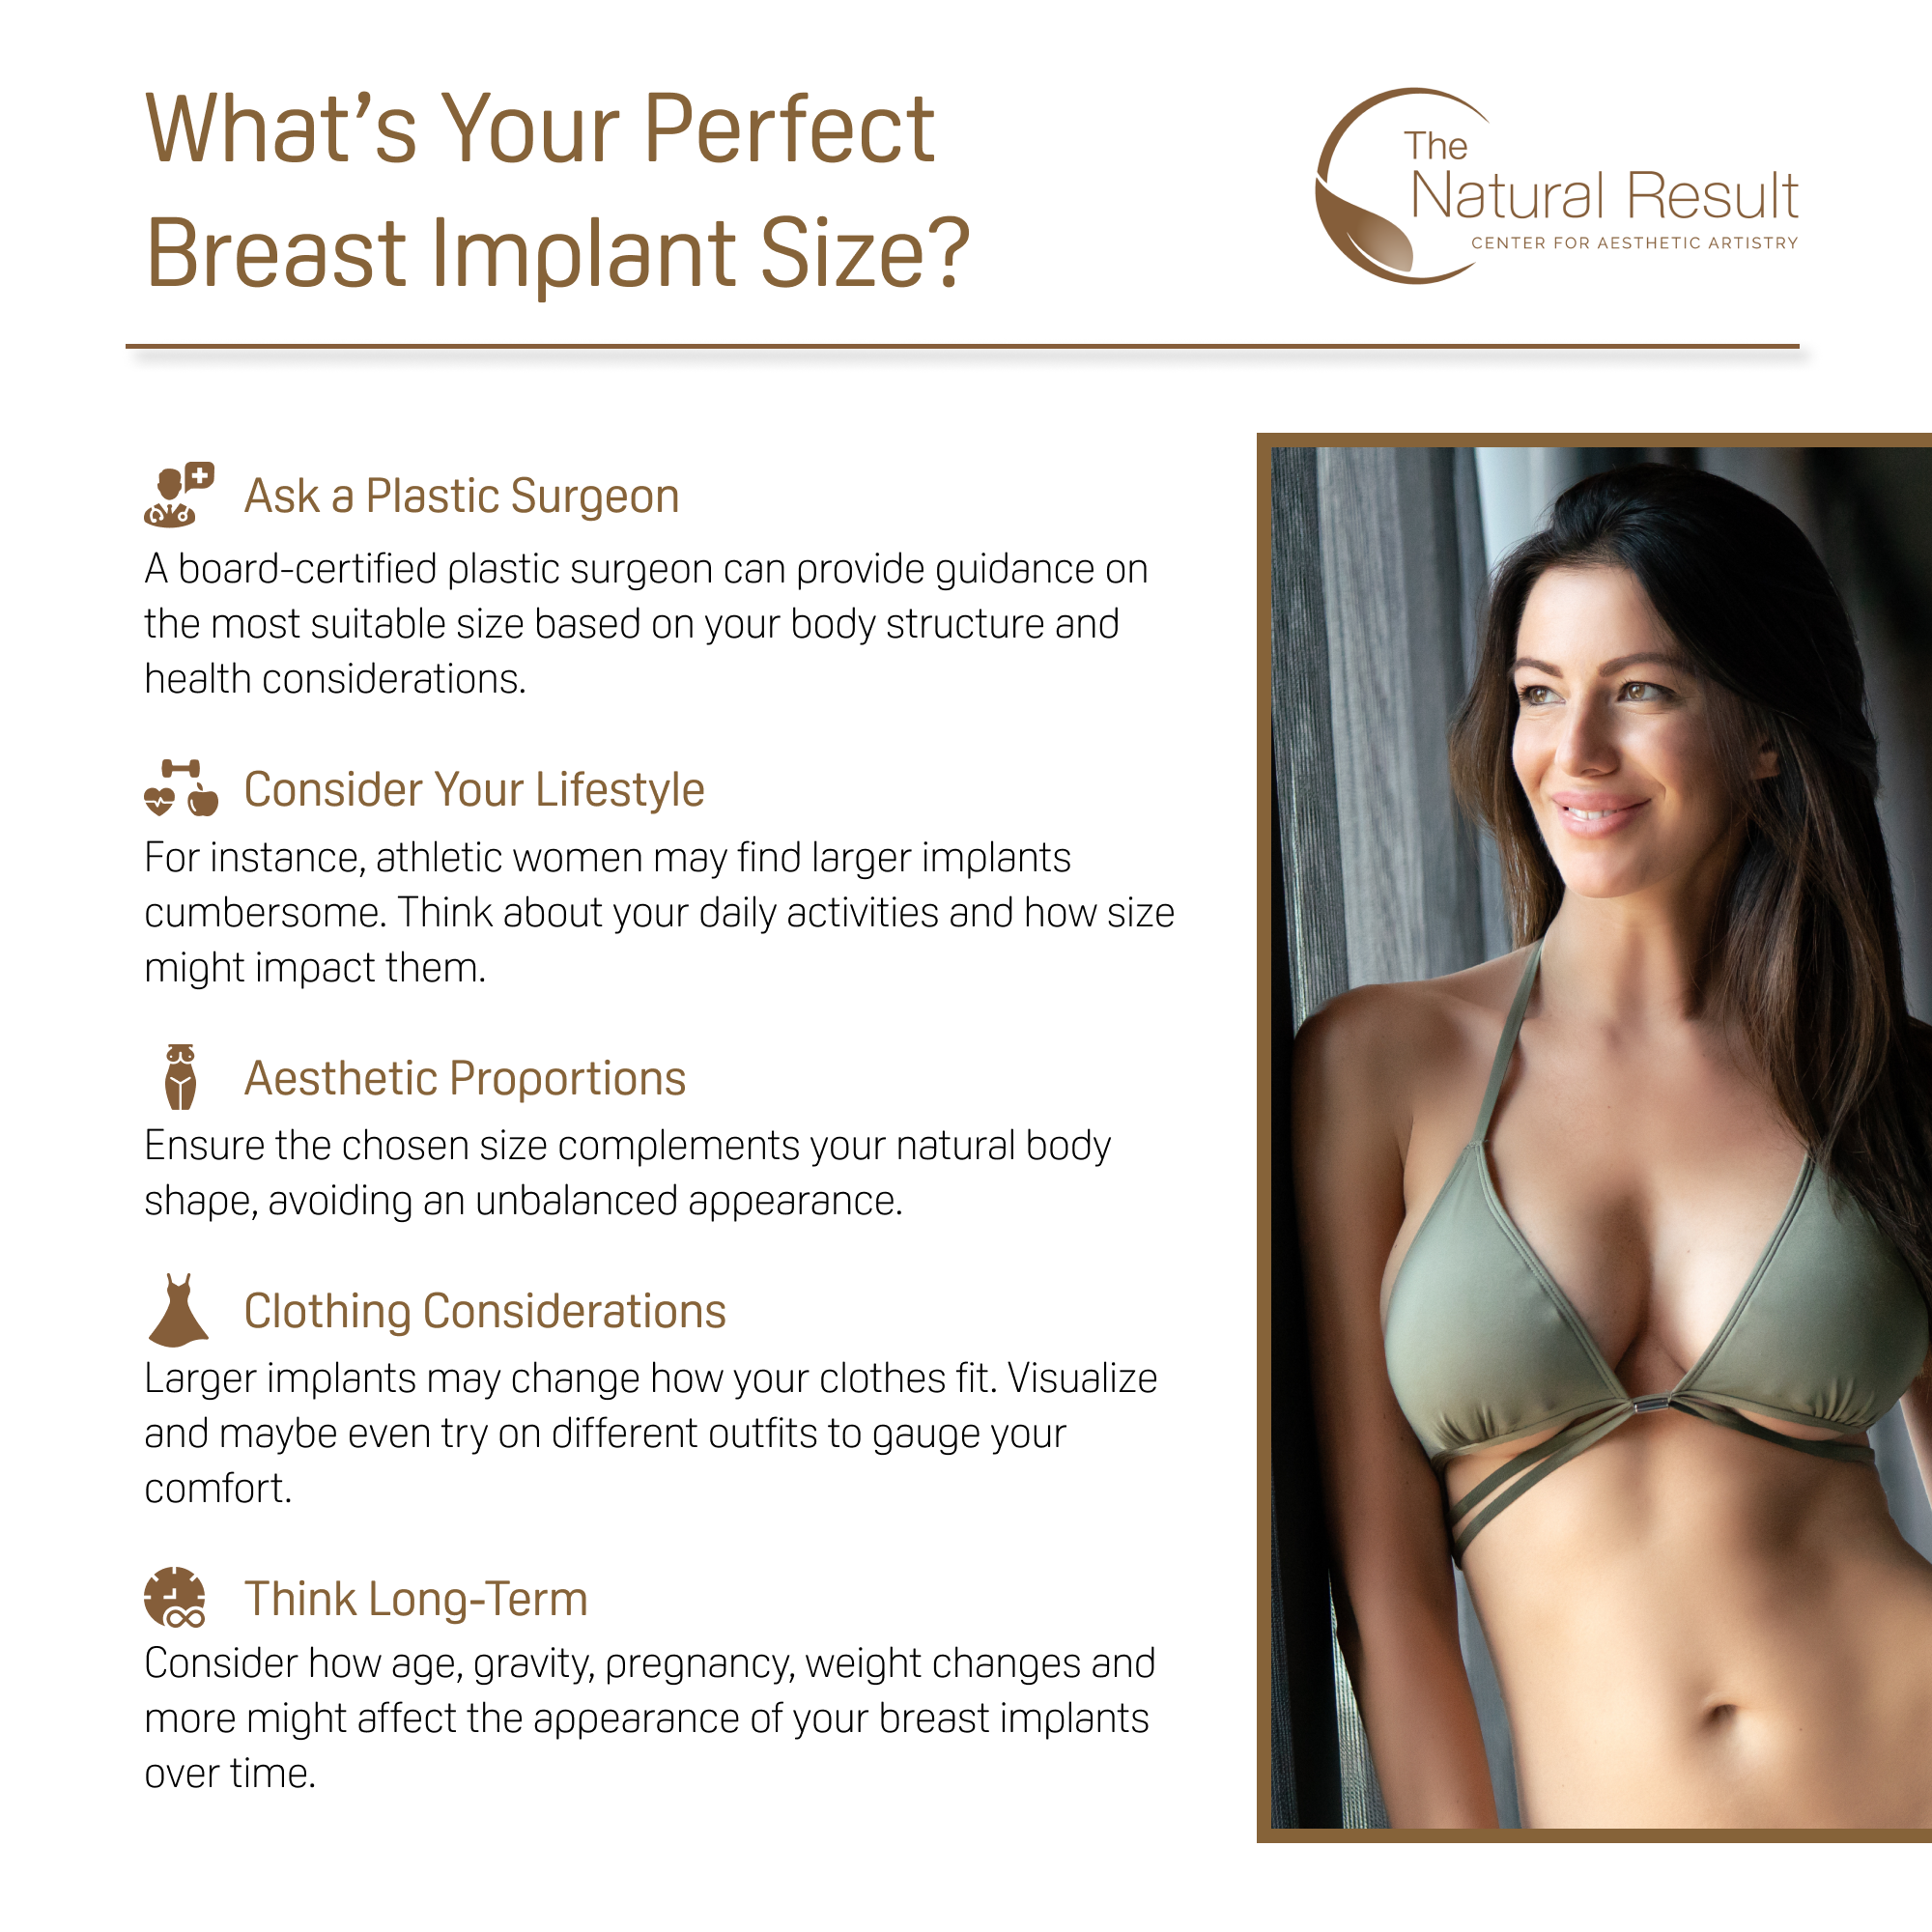 Breast Size Info-graphic